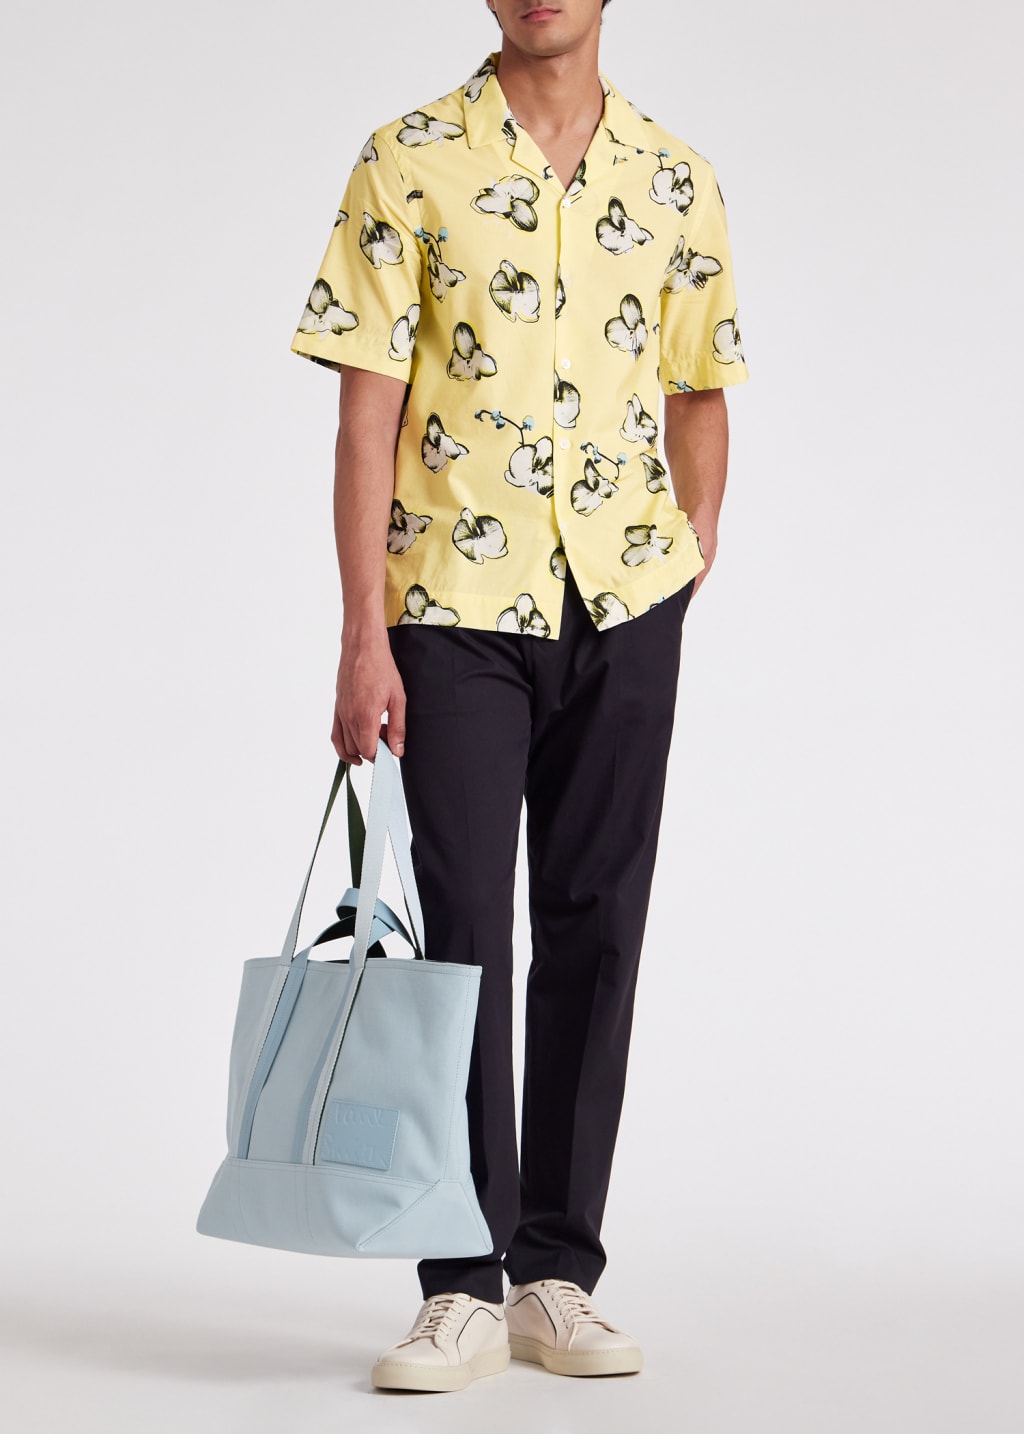 Model View - Yellow 'Orchid' Print Viscose-Blend Short-Sleeve Shirt Paul Smith